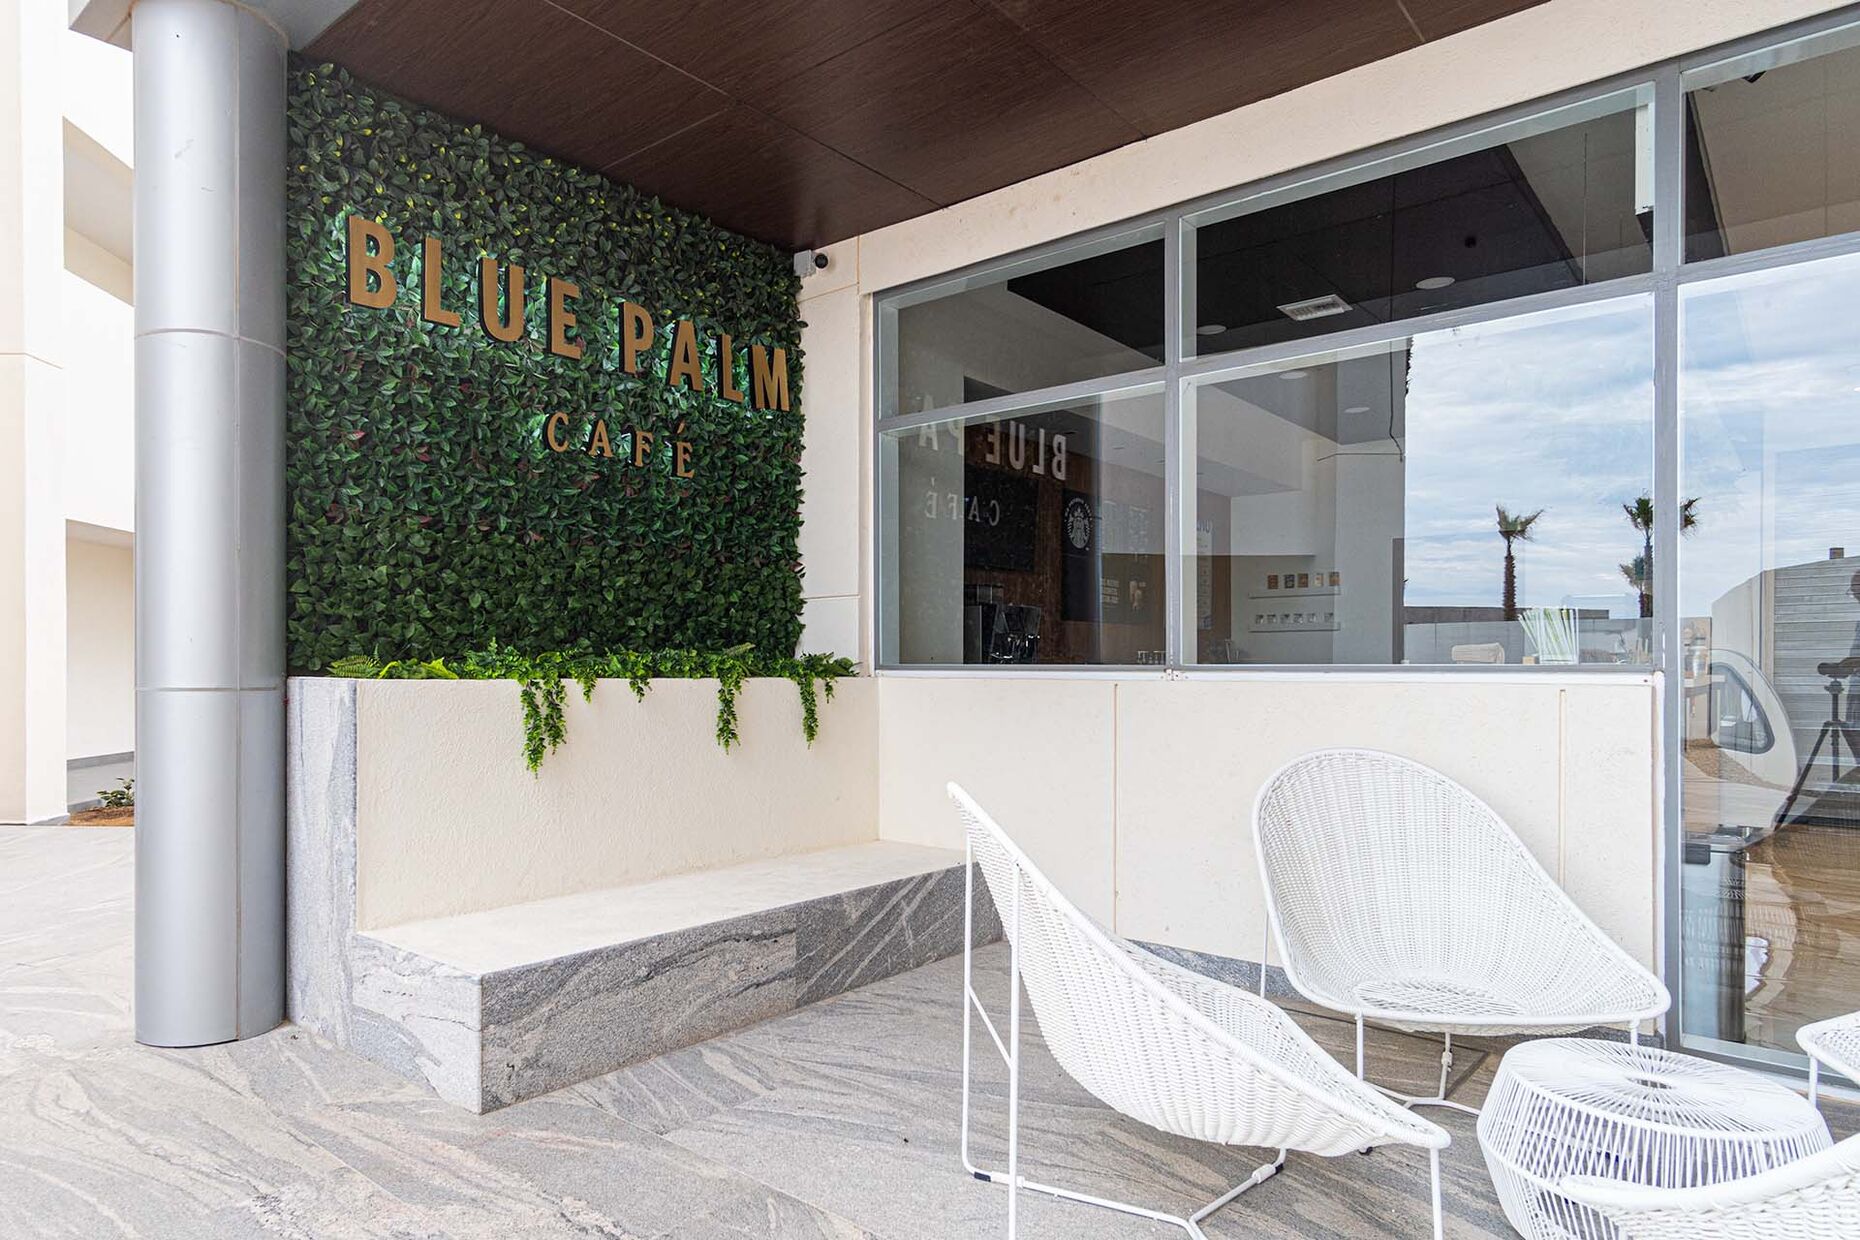 Blue Palm Cafe serves up Starbucks coffee drinks